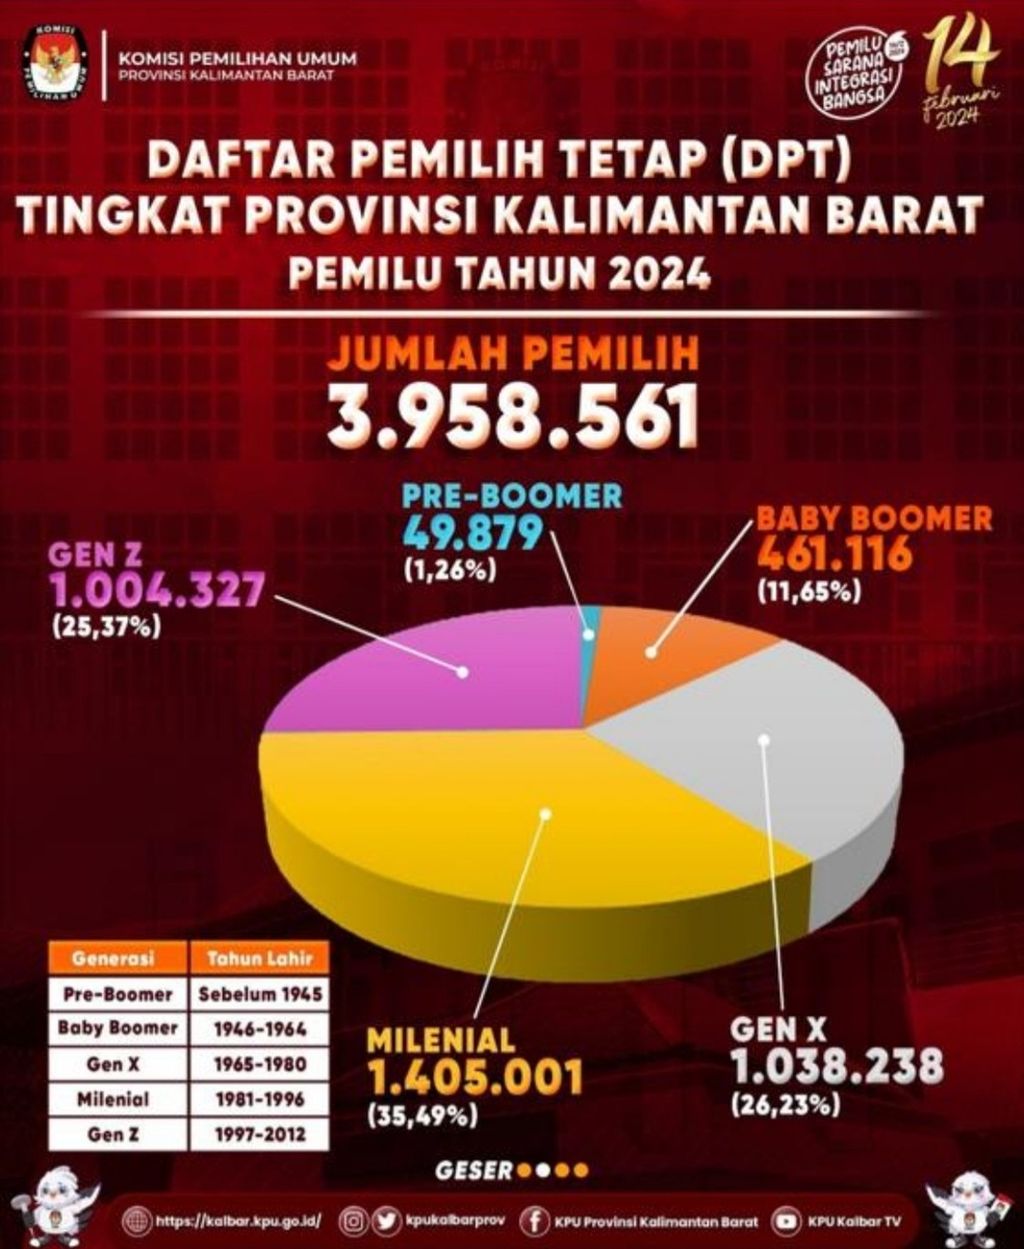 Jumlah Pemilih di Kalimantan Barat dalam Pemilu 2024